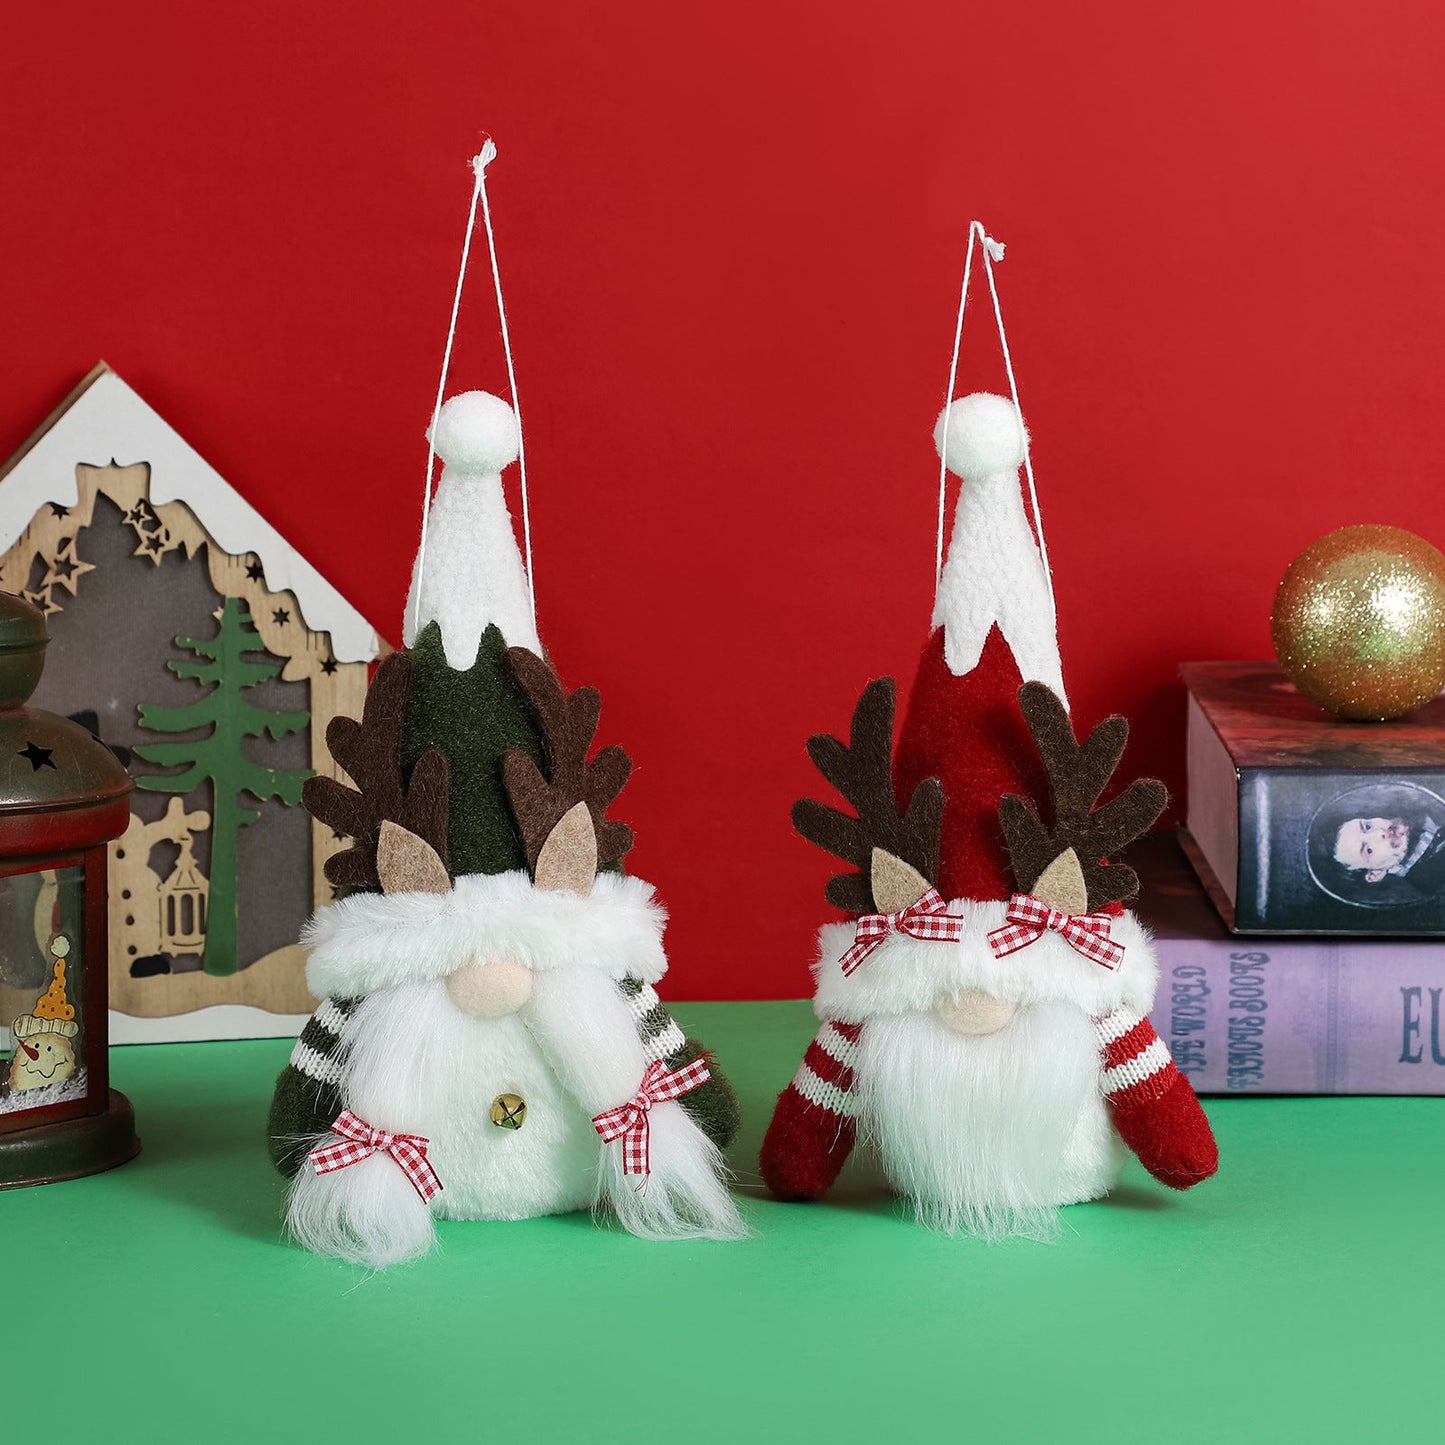 Faceless Santa Claus Antlers Plush Christmas Decorations - TOY-PLU-33901 - YWSYMC - 42shops